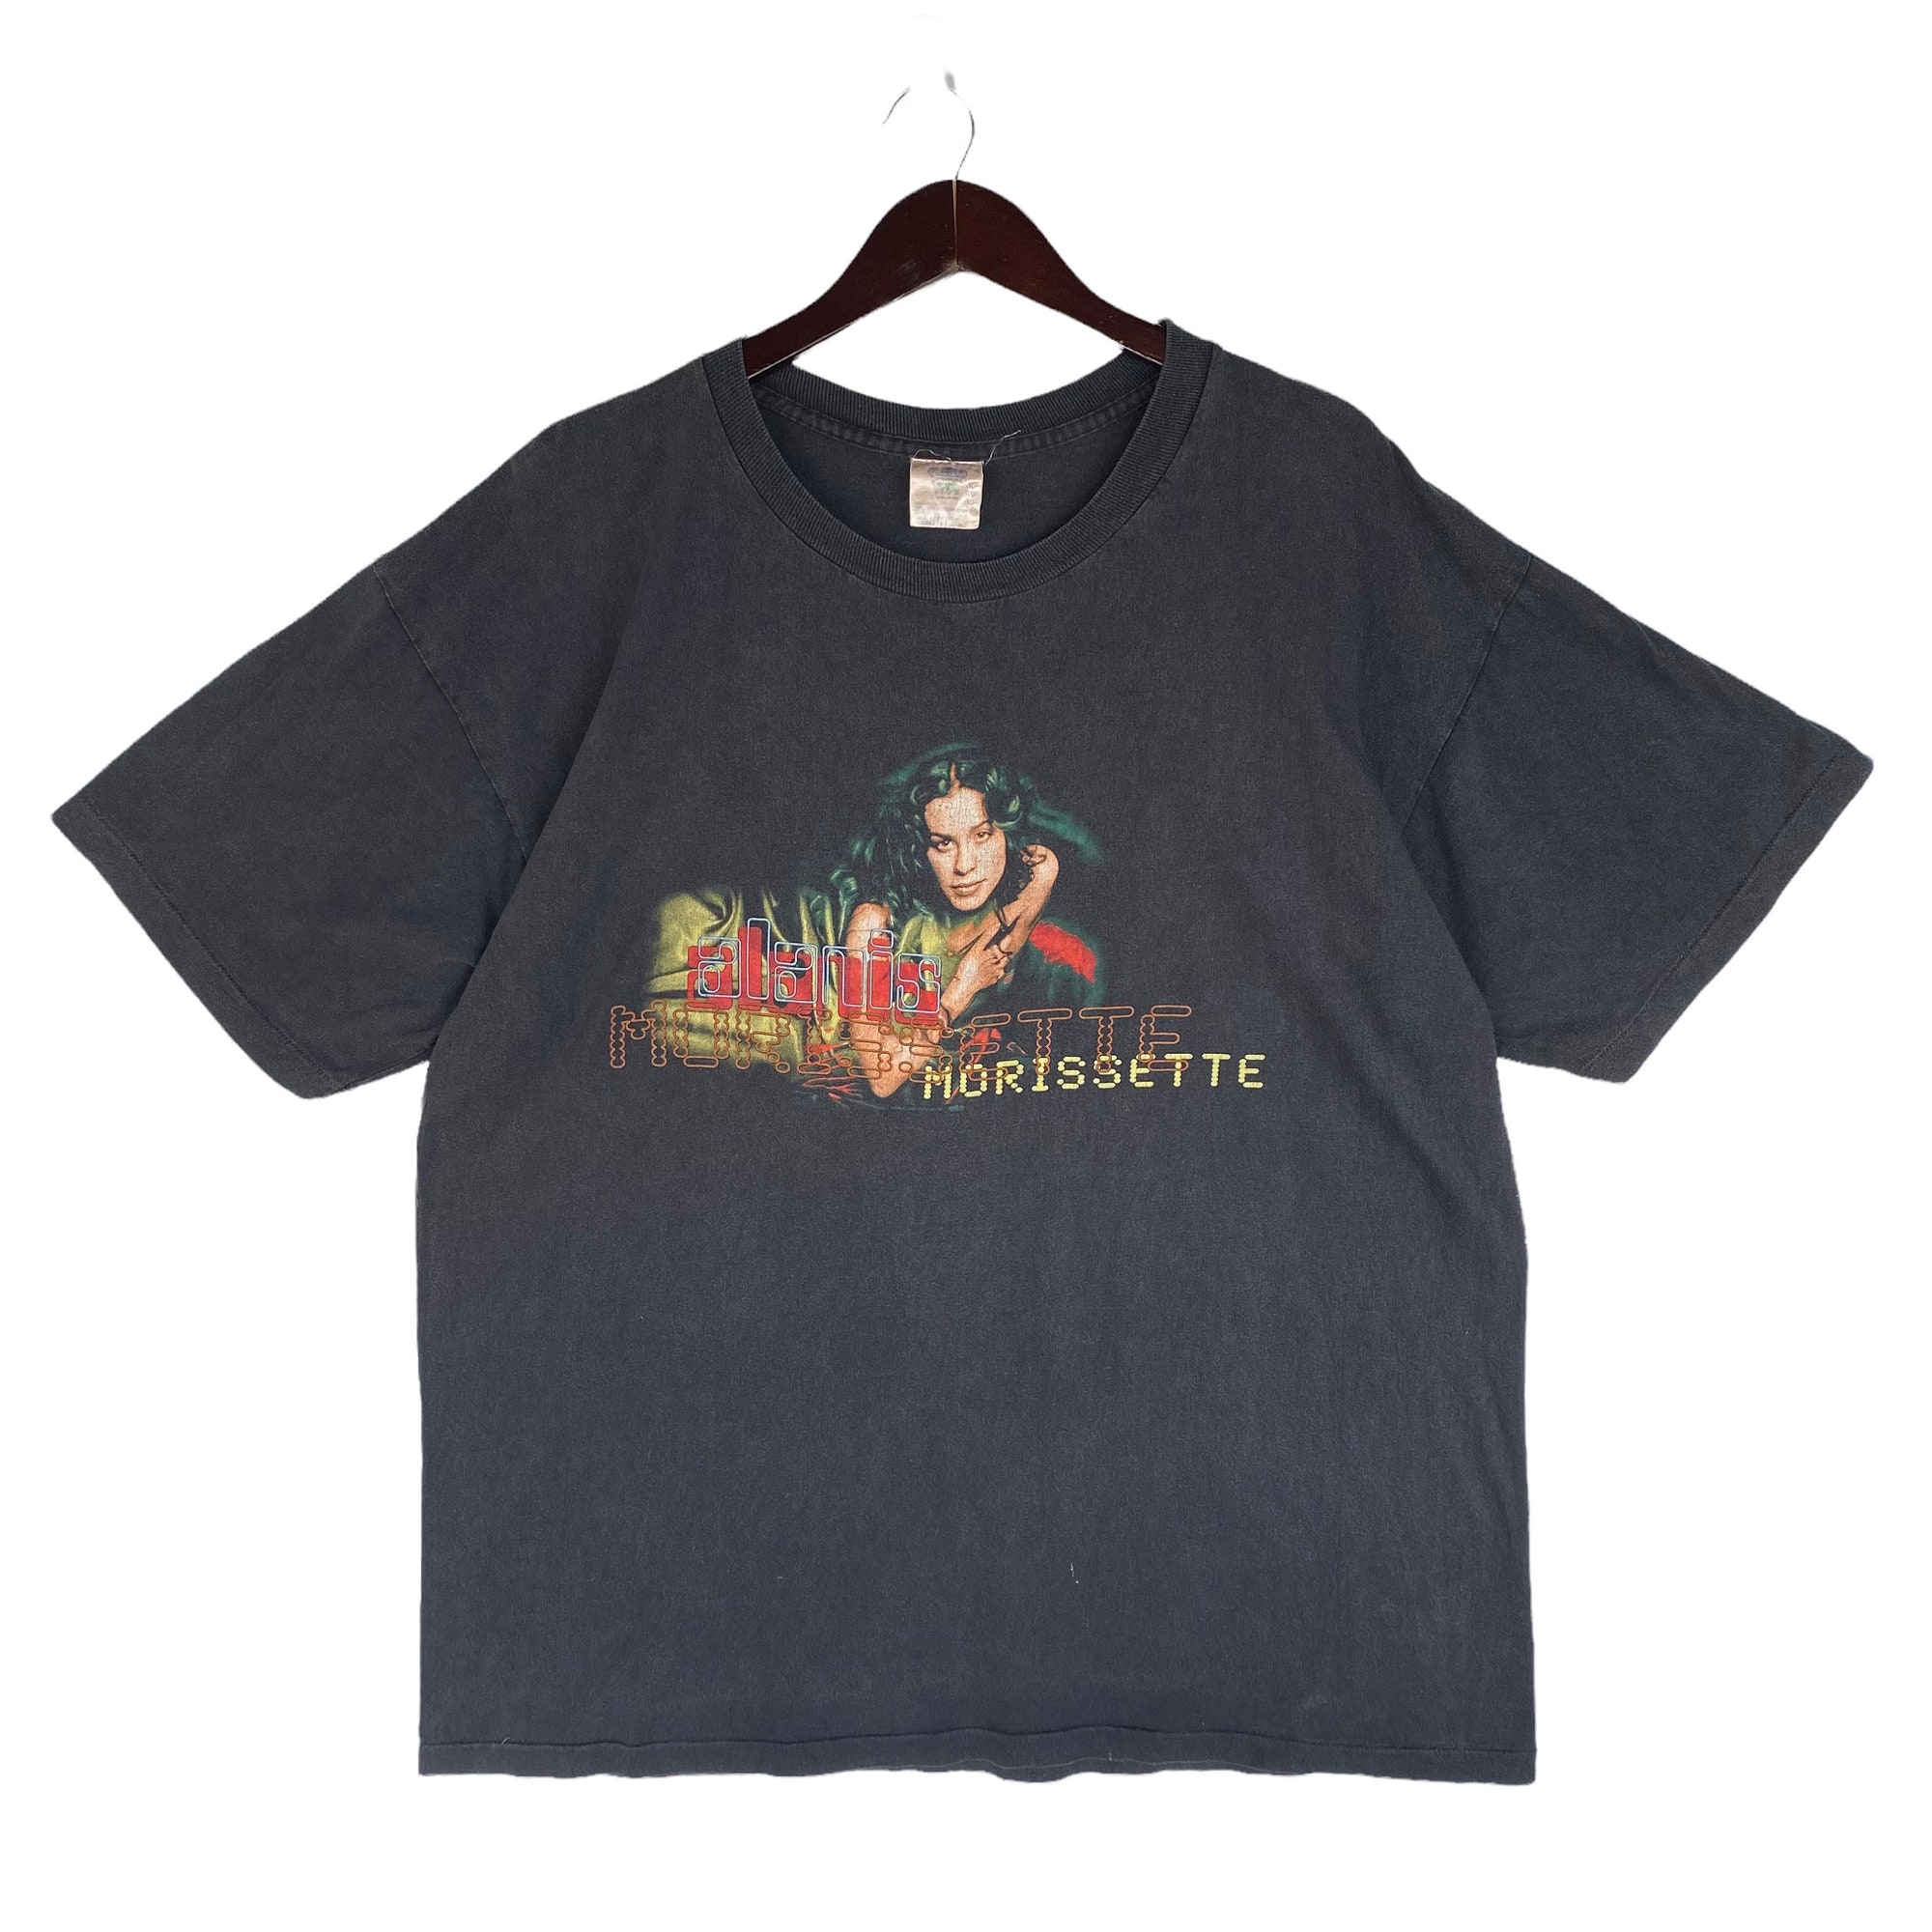 VINTAGE 90s Alanis Morissette Alternative Rock Singer, Songwriter Pop Rock Promo Can't Not Tour Concert 1998 T-Shirt